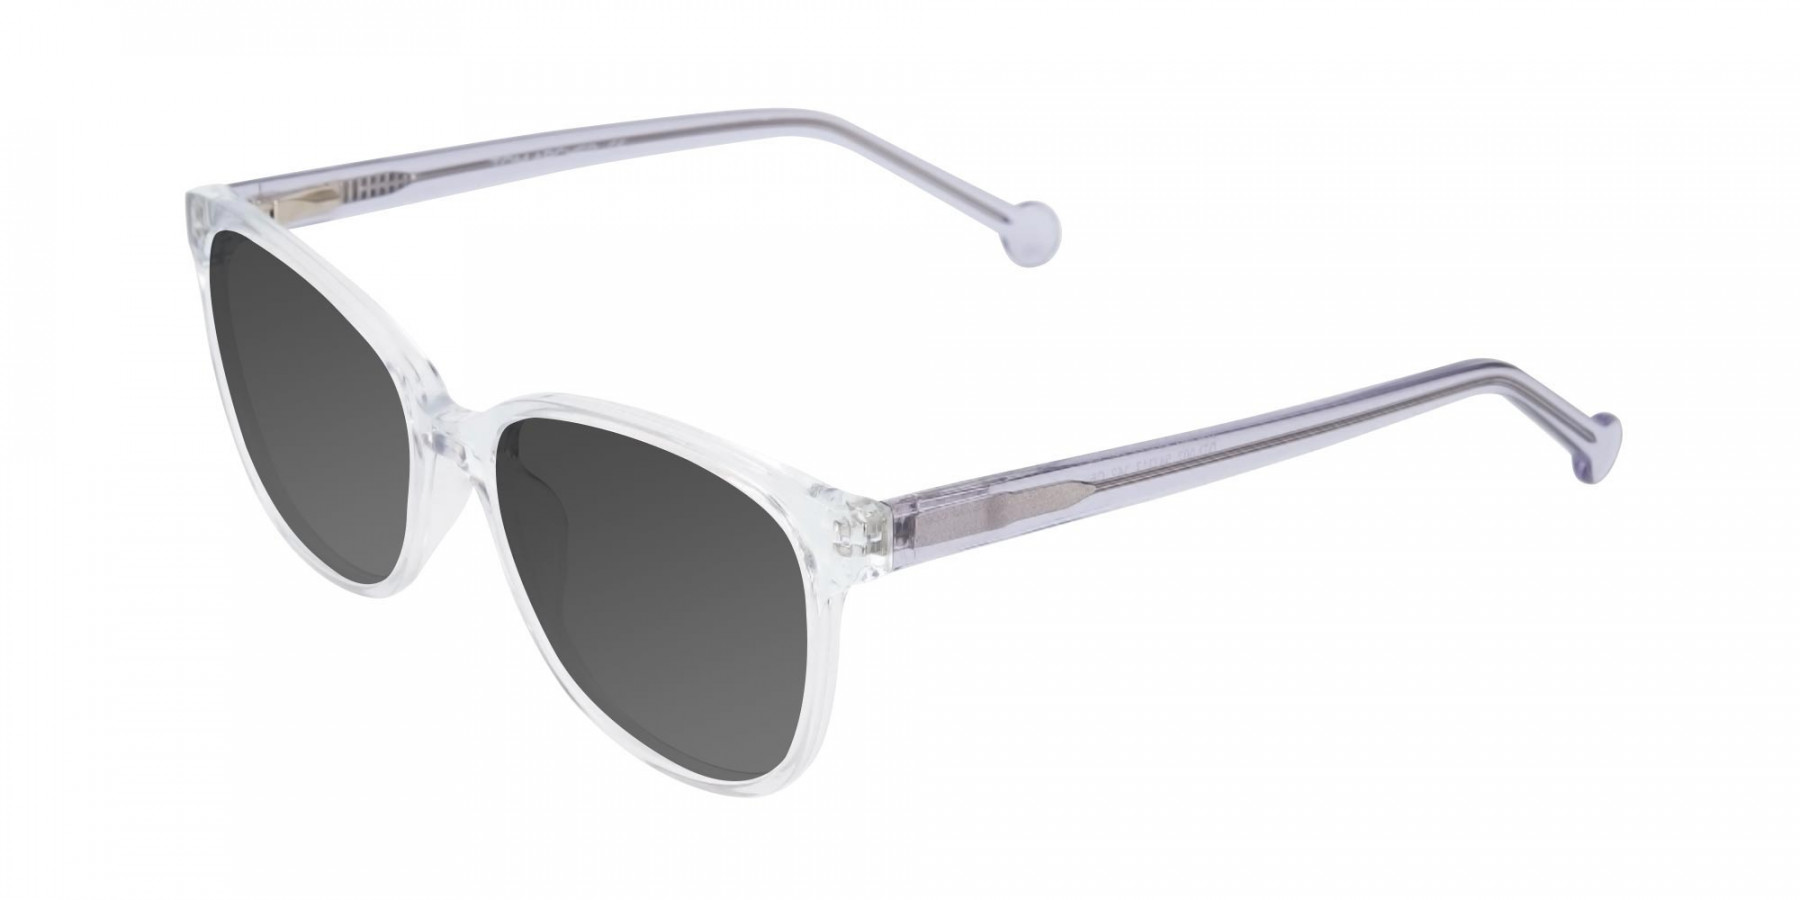 Crystal Clear Frame Sunglasses Heaton S 1 Specscart®